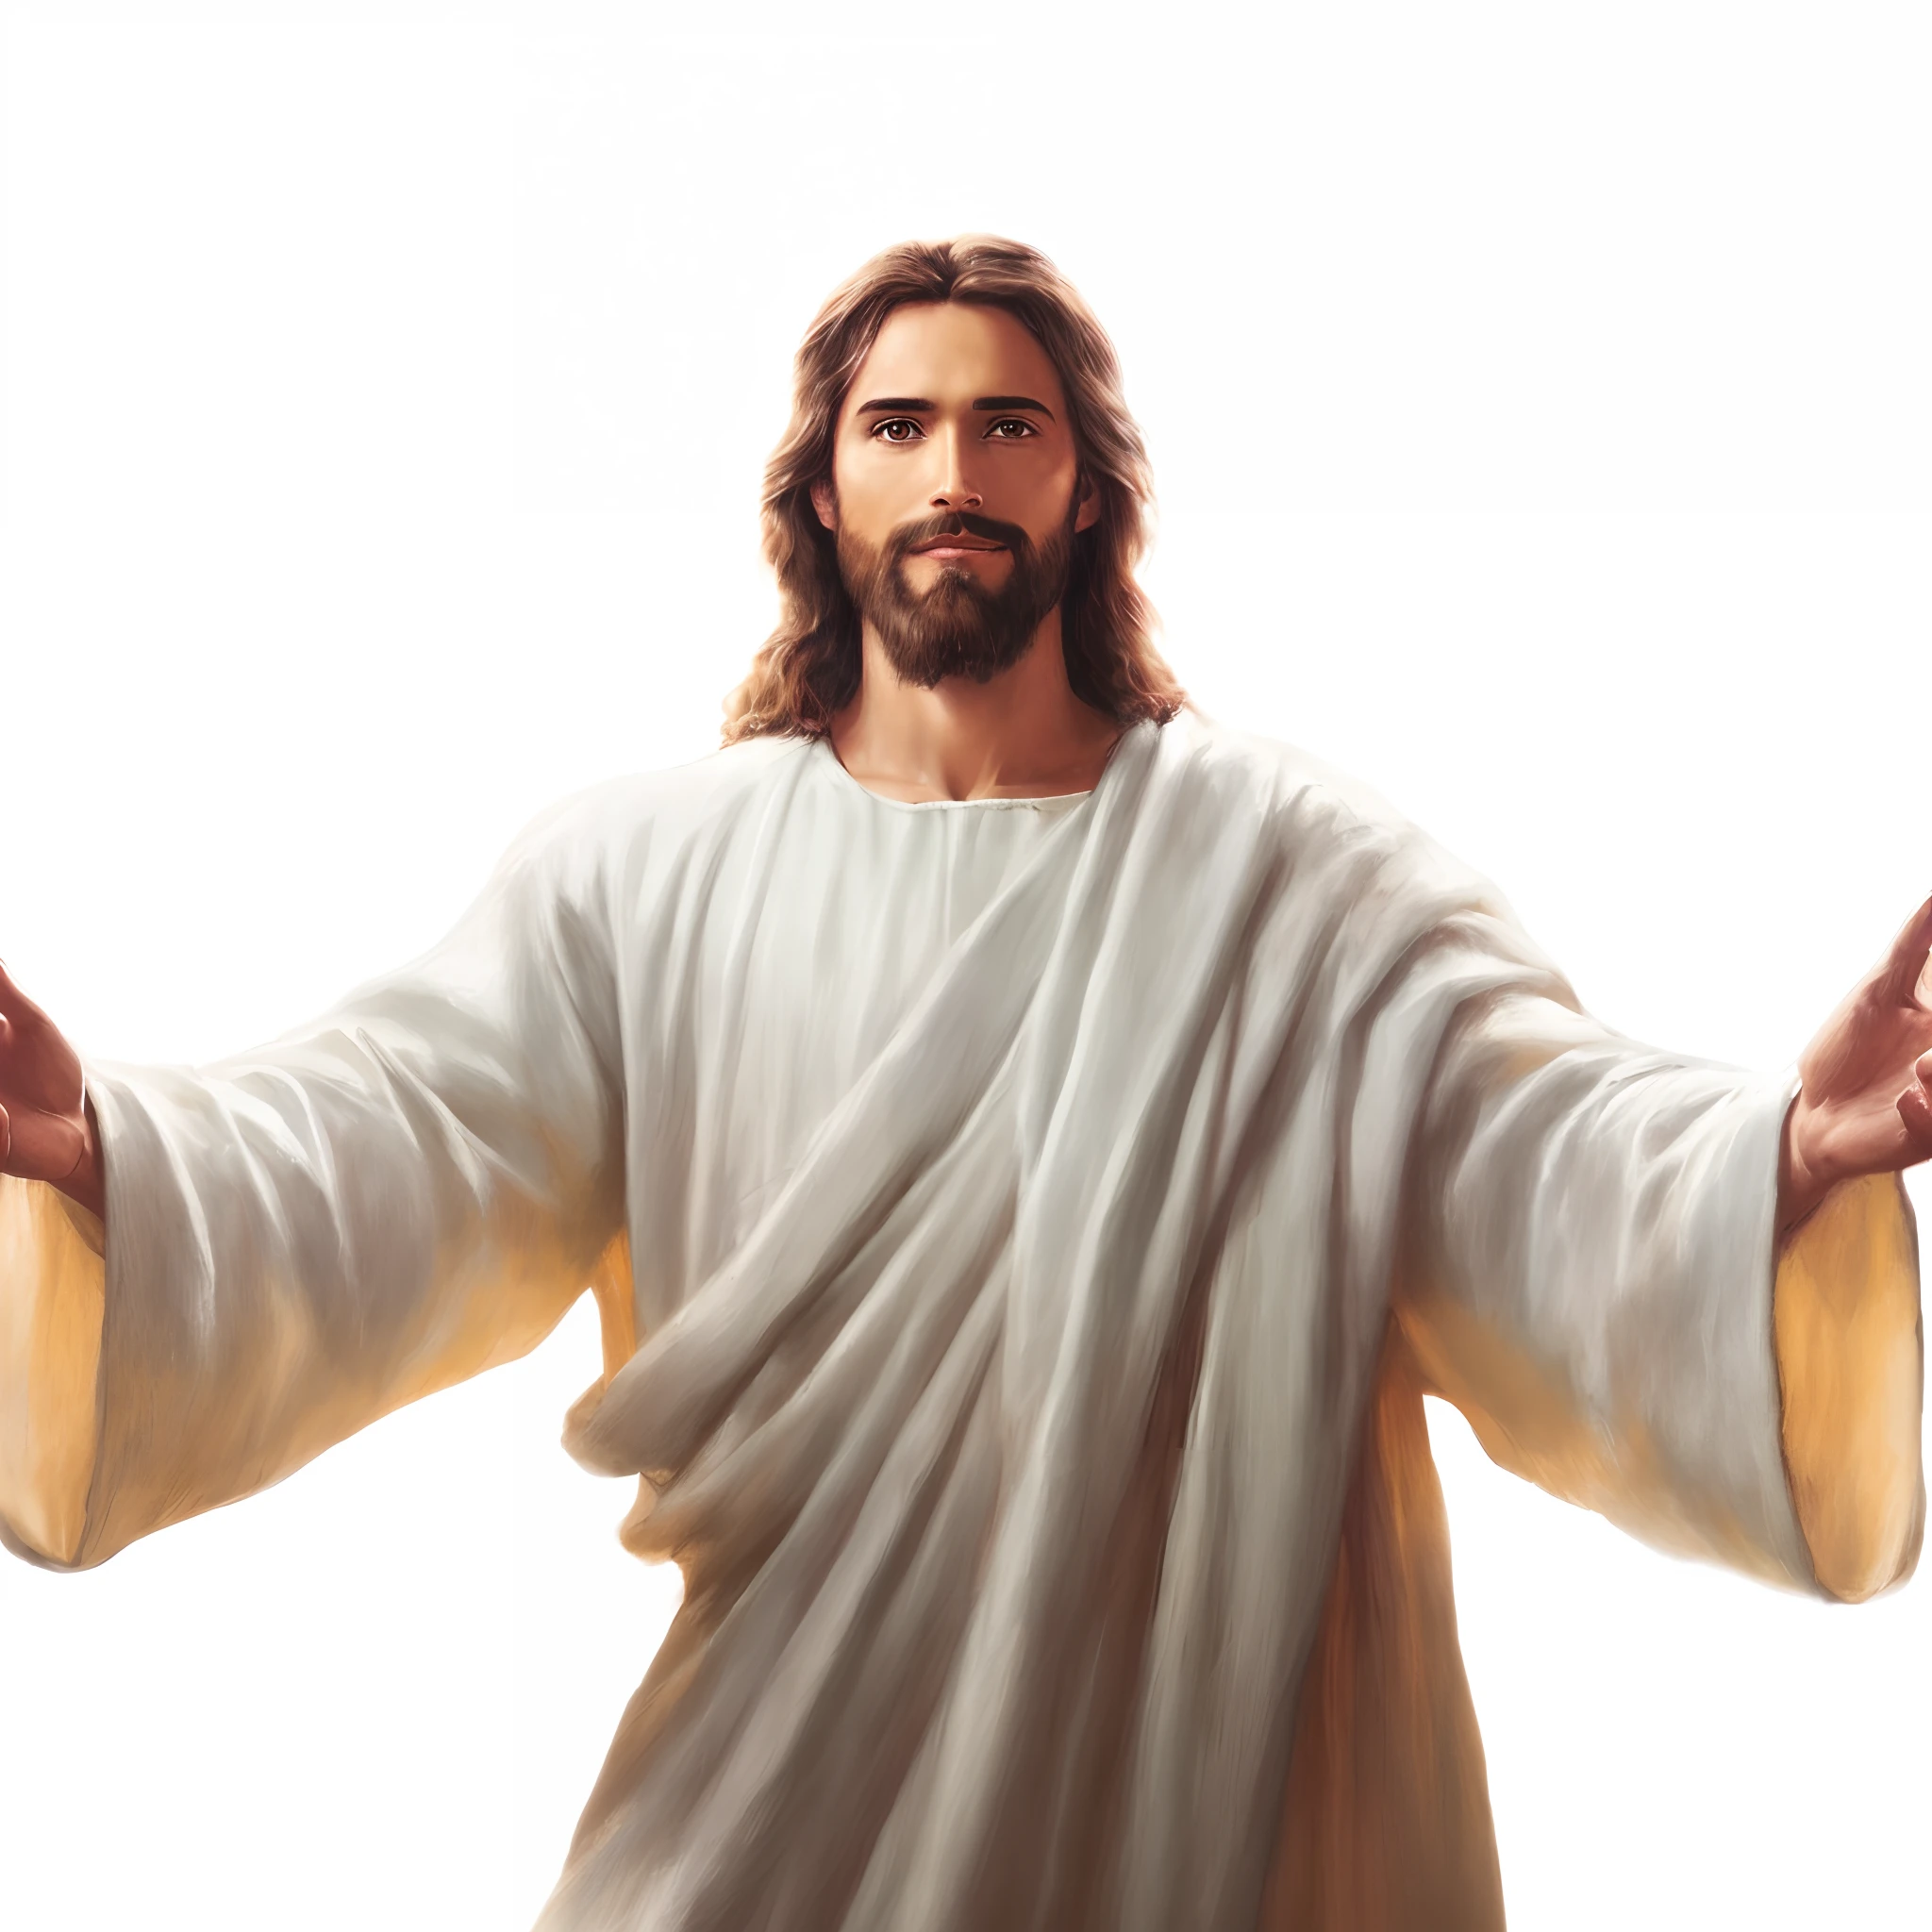 A closeup of 예수 with outstretched arms, 예수 Cristo, 그 사람이 당신에게 따뜻하게 인사하고 있어요, 그의 팔이 펼쳐졌다, 예수, Vestido como 예수 Cristo, Retrato de 예수 Cristo, 주님과 구원자, 전능하신 젊은 하나님, 예수 Gigachad, 그의 팔이 펼쳐졌다. 비행 준비, 예수 Negro, rosto de 예수, 나사렛 예수